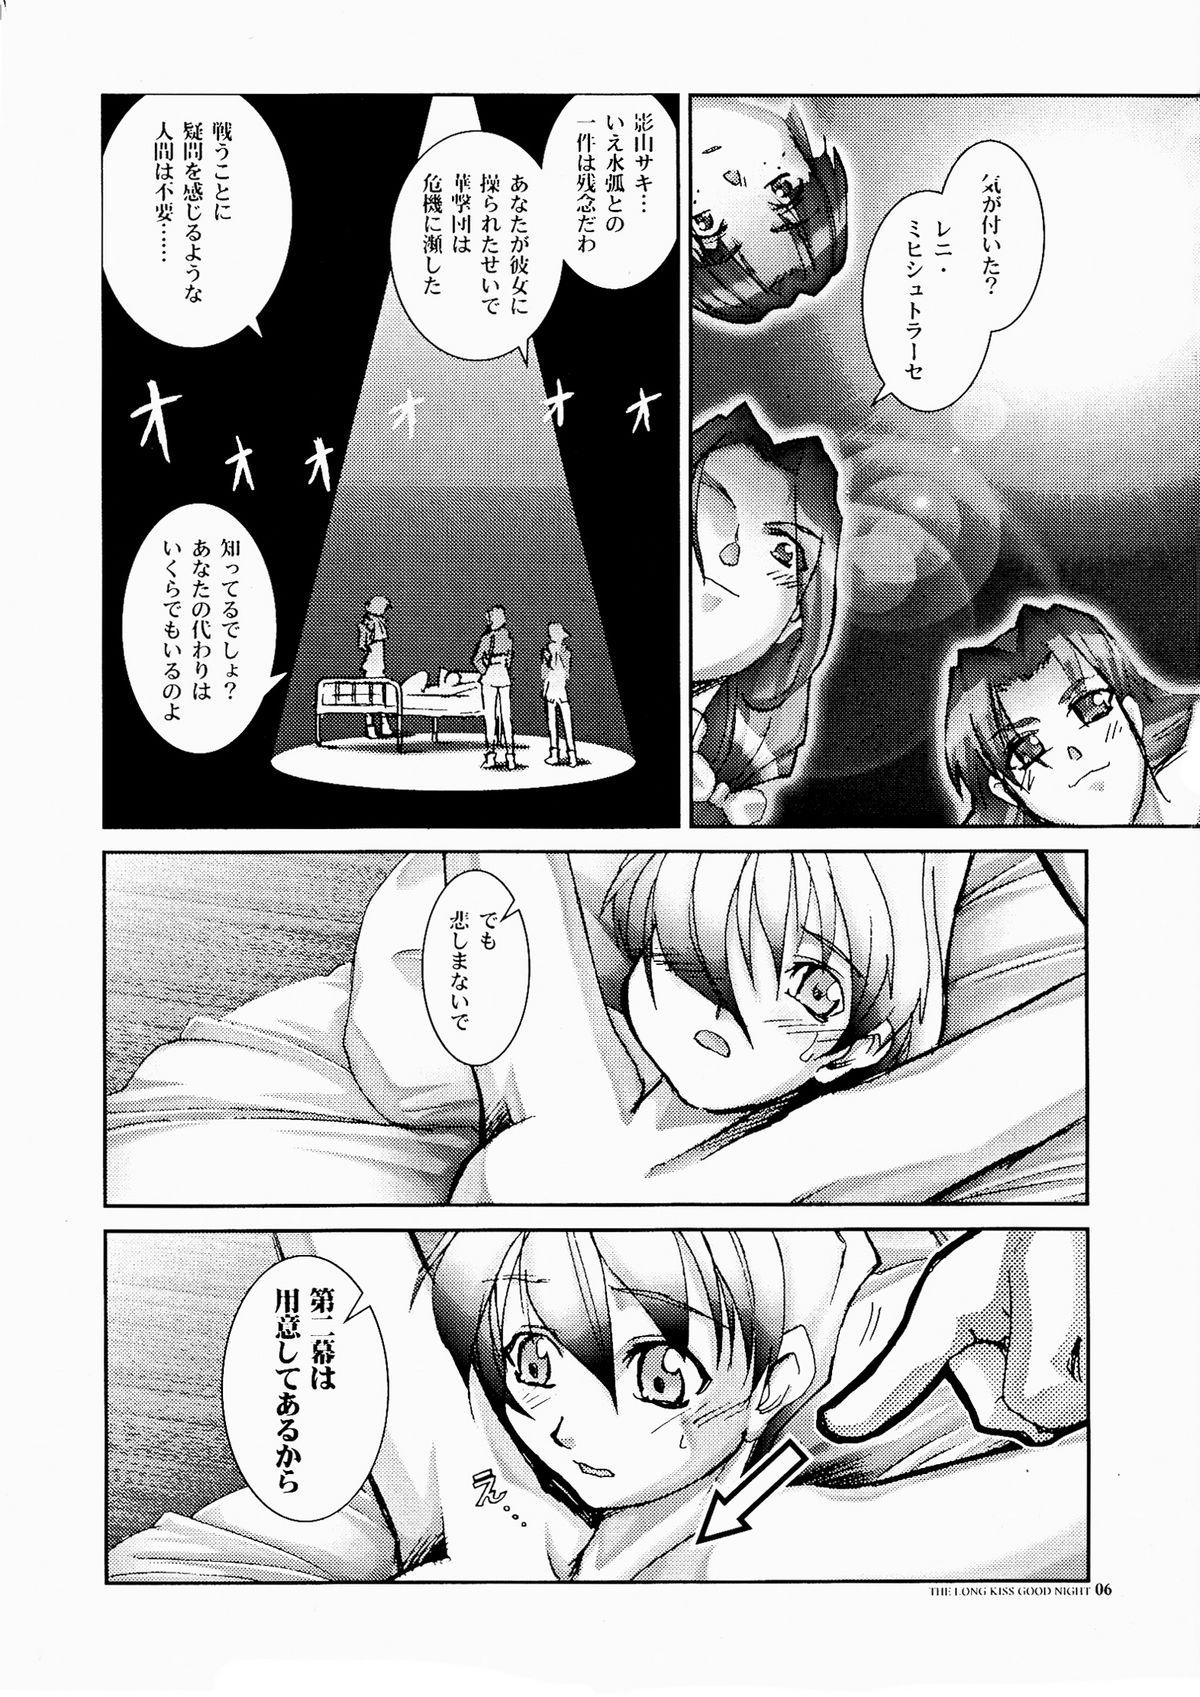 Tgirl PG #06 - THE LONG KISS GOOD NIGHT - Sakura taisen The - Page 6